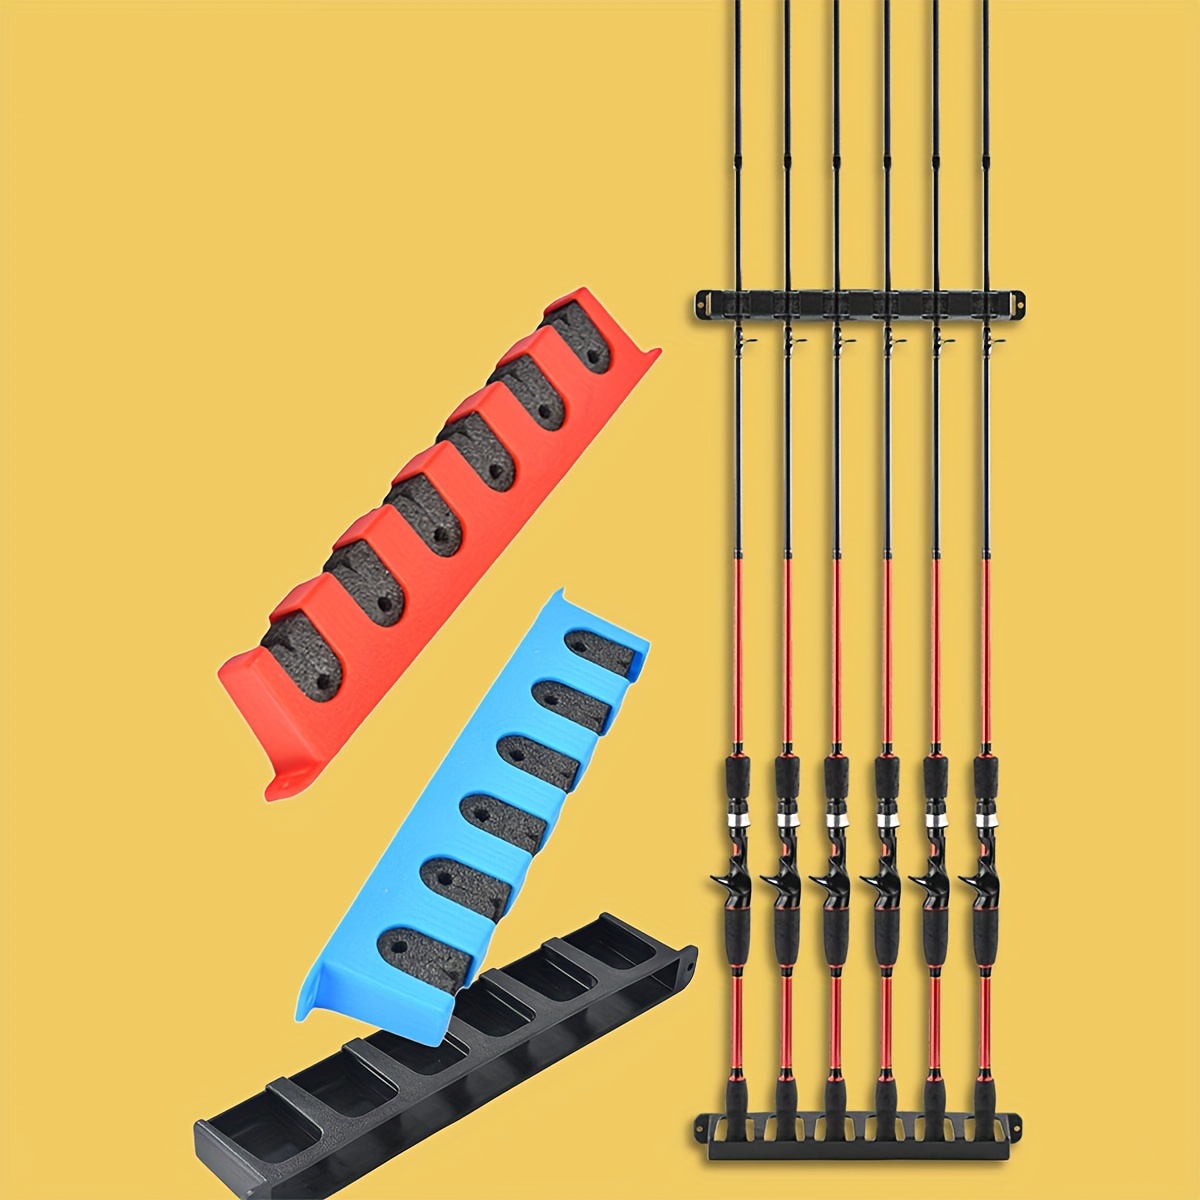 Vertical/horizontal Fishing Rod Holder Racks Wall Mounted - Temu